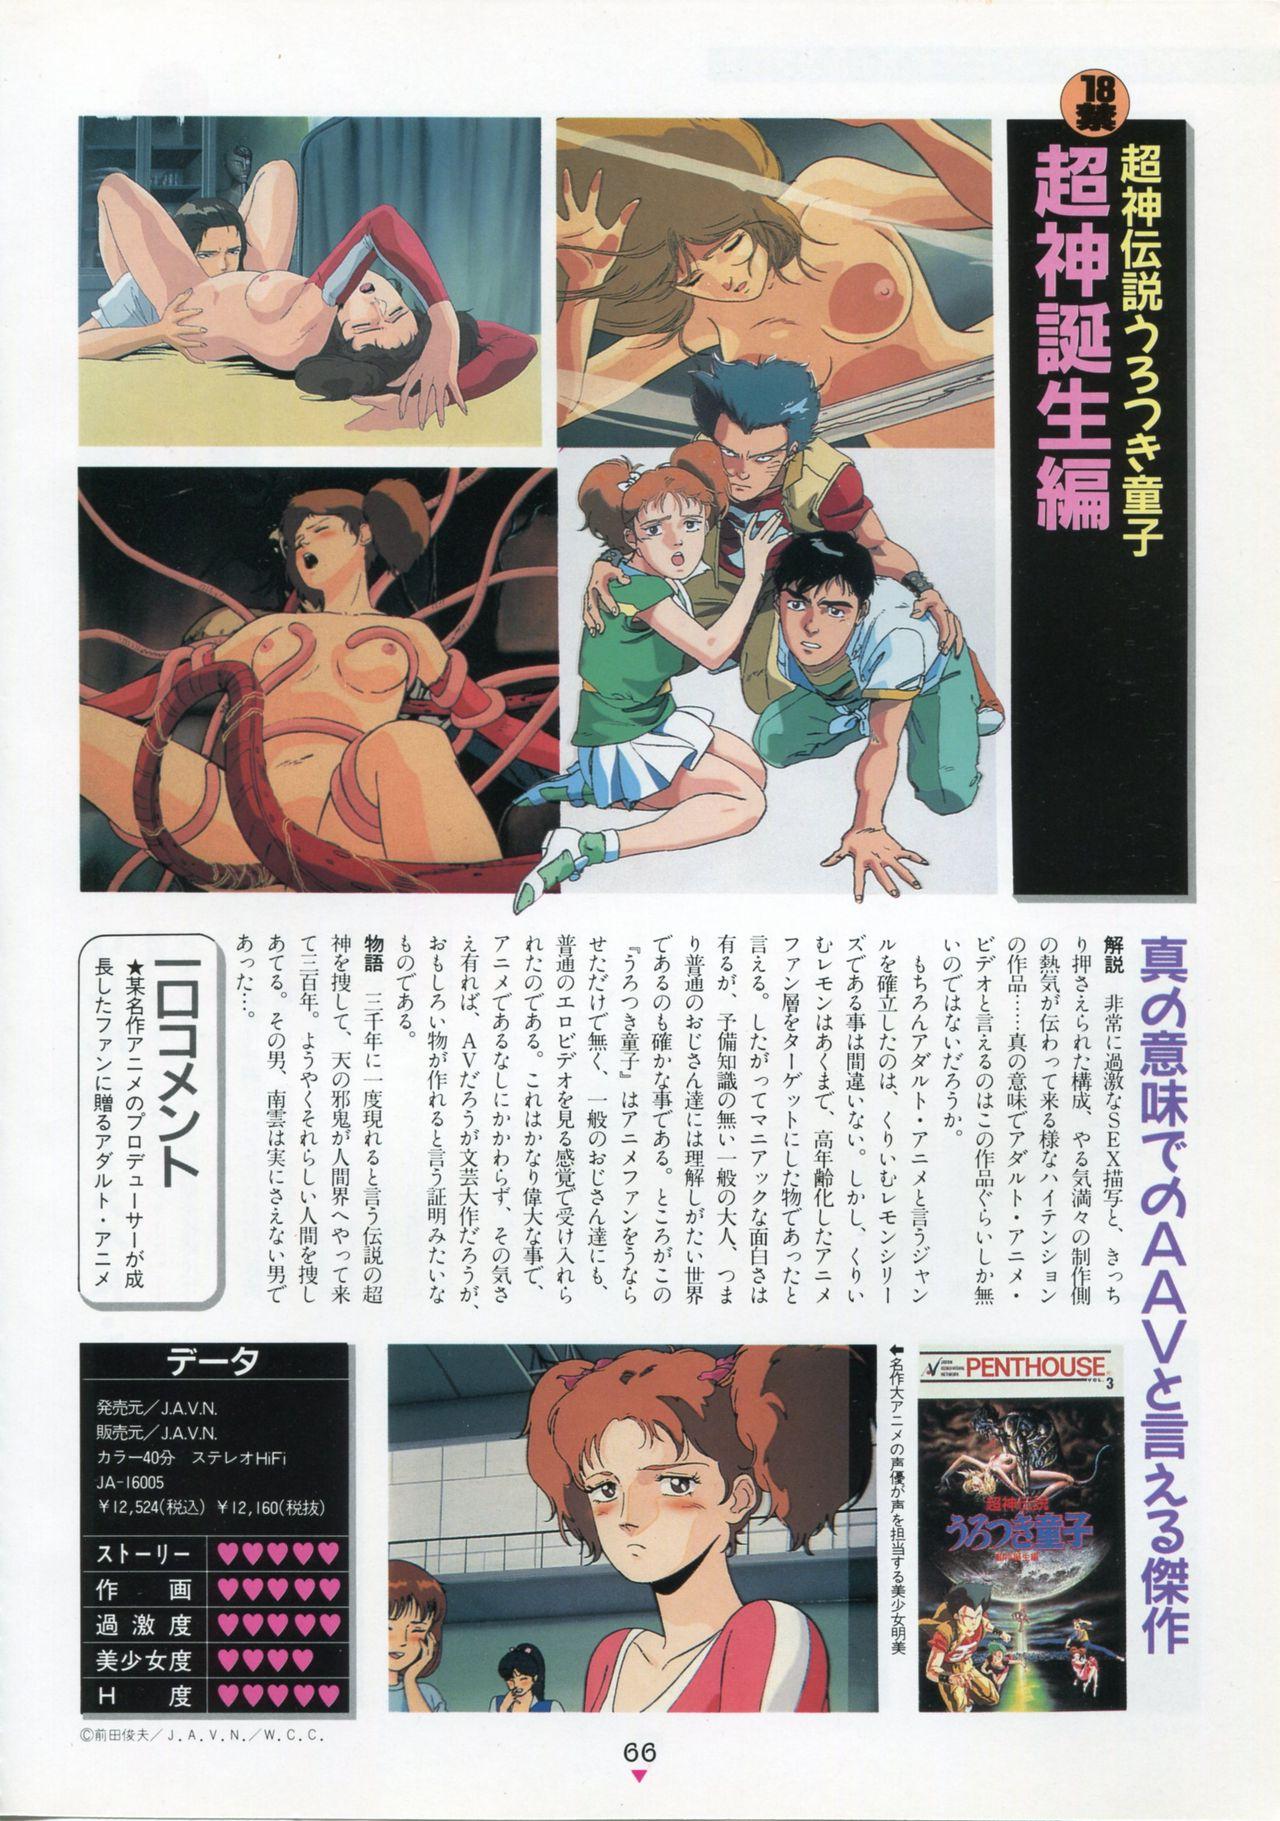 Bishoujo Anime Daizenshuu - Adult Animation Video Catalog 1991 61